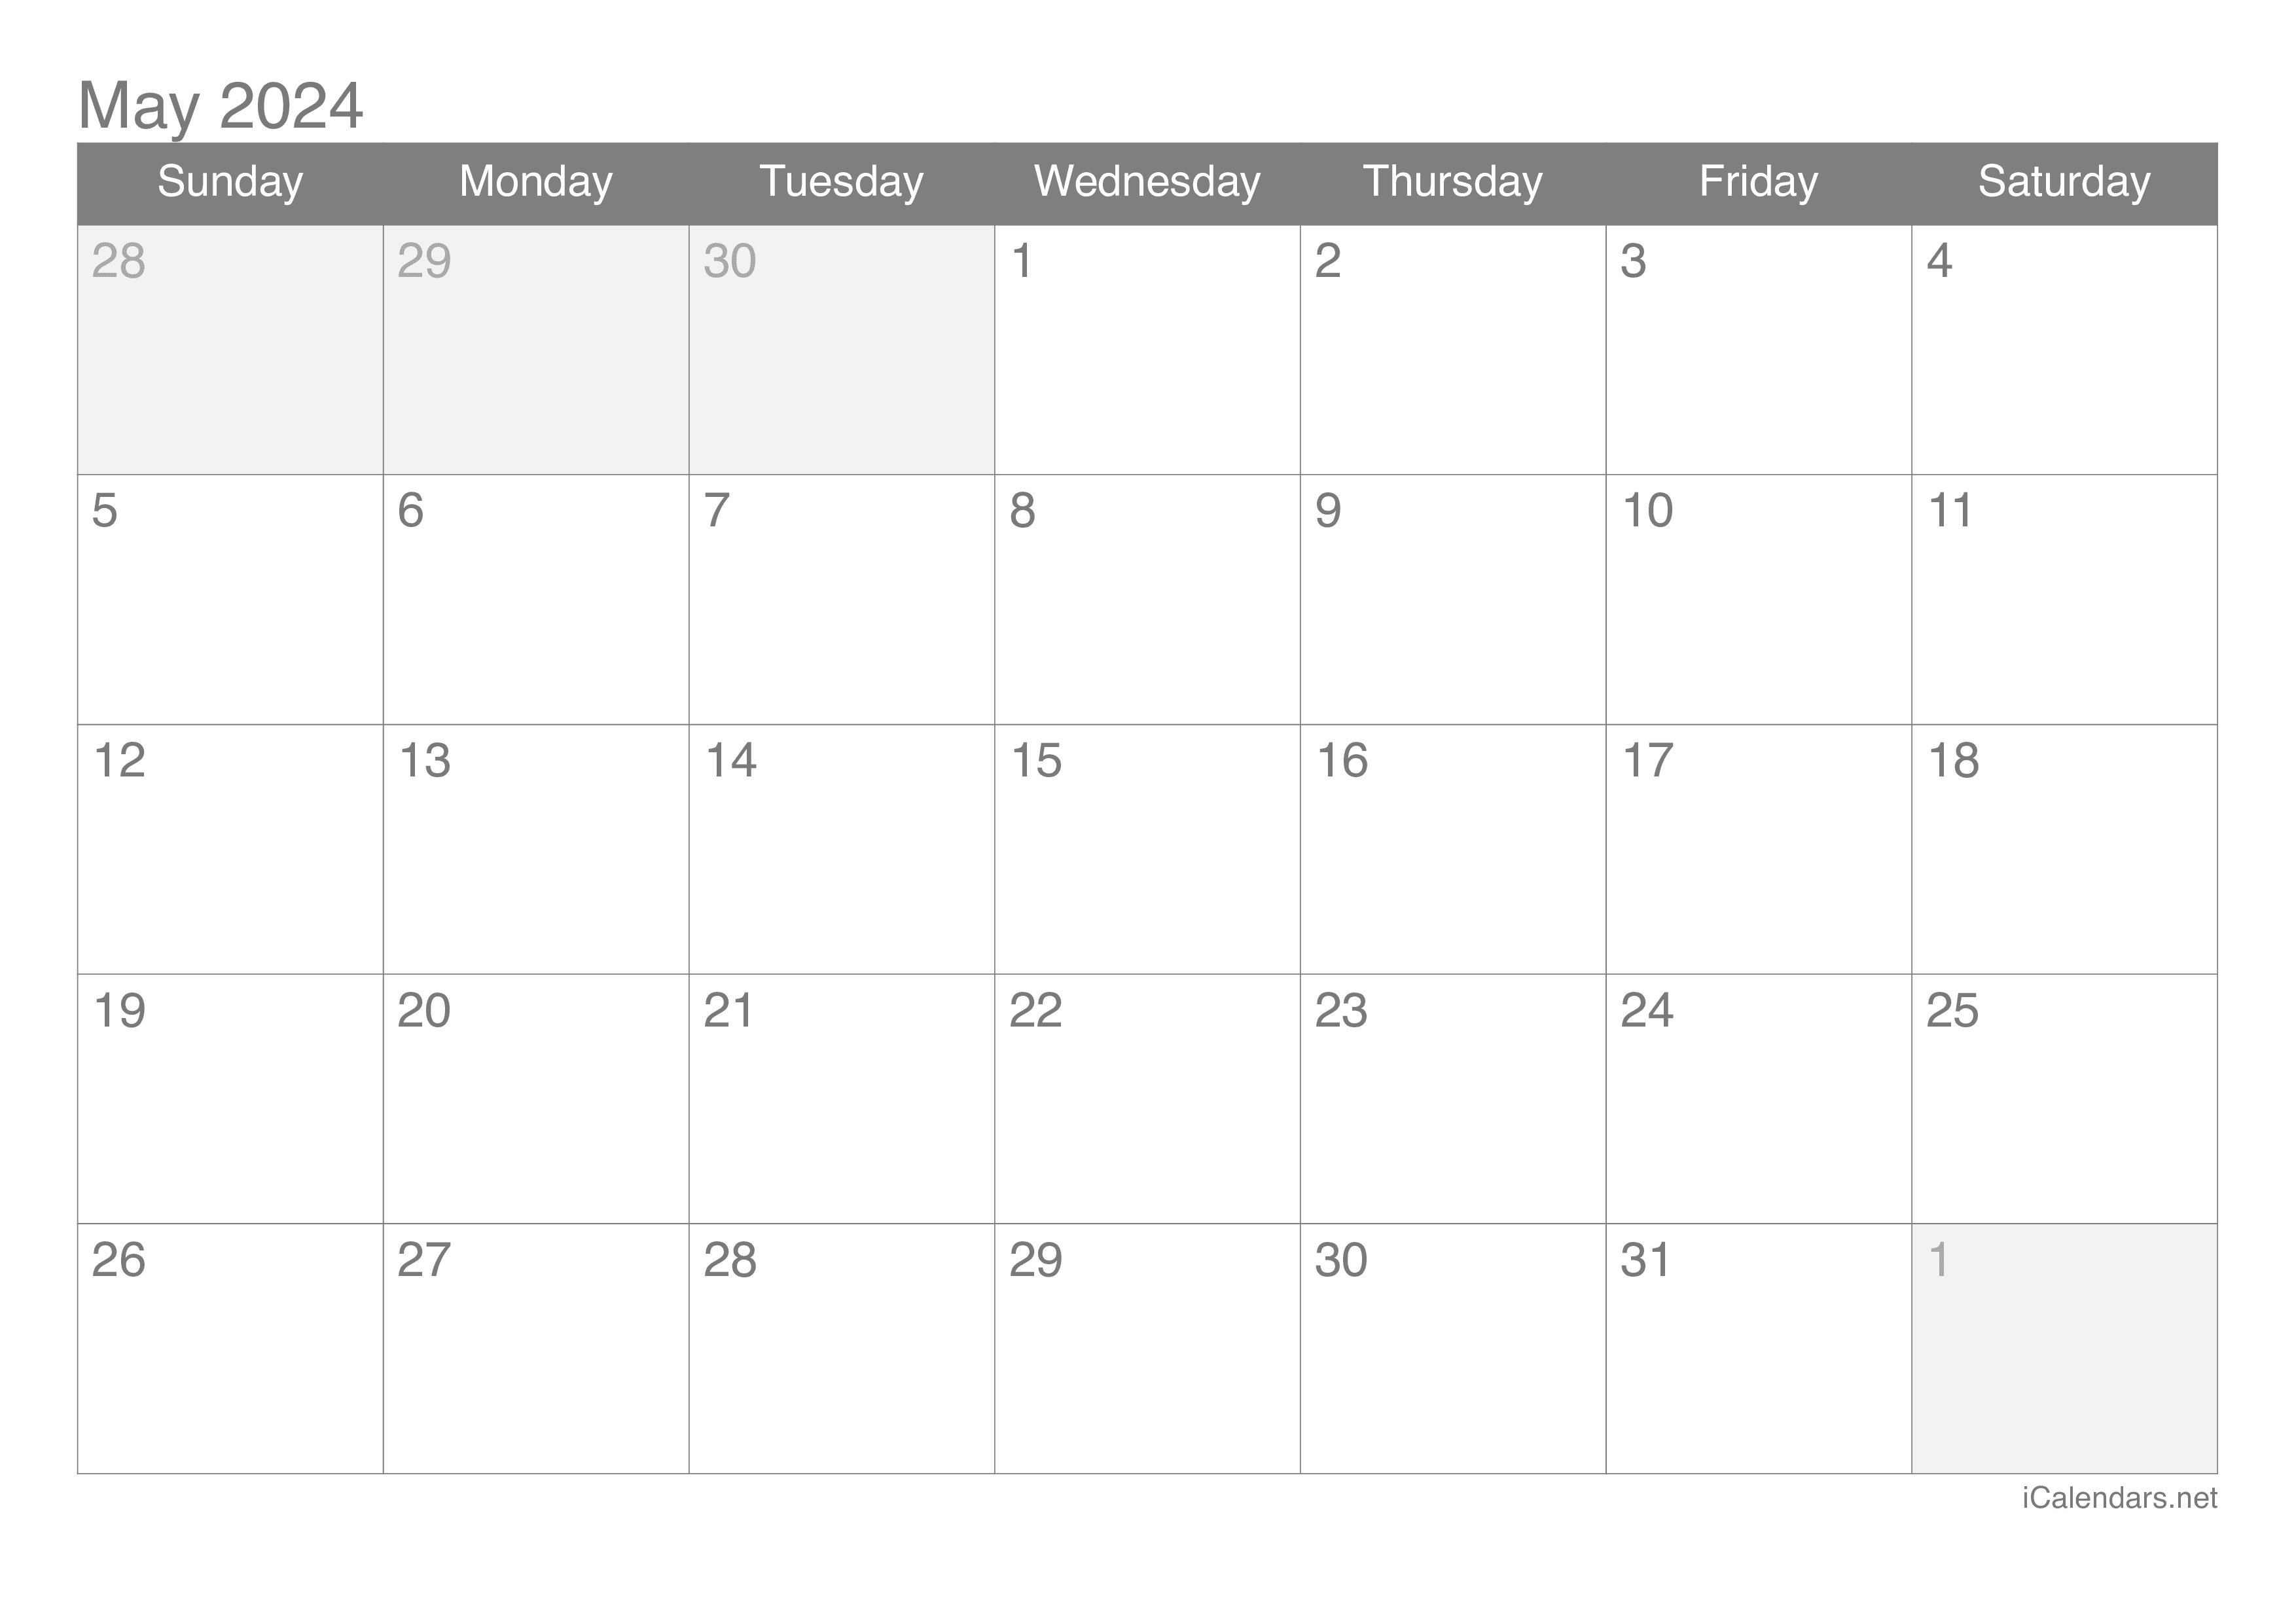 May 2024 Printable Calendar - icalendars.net